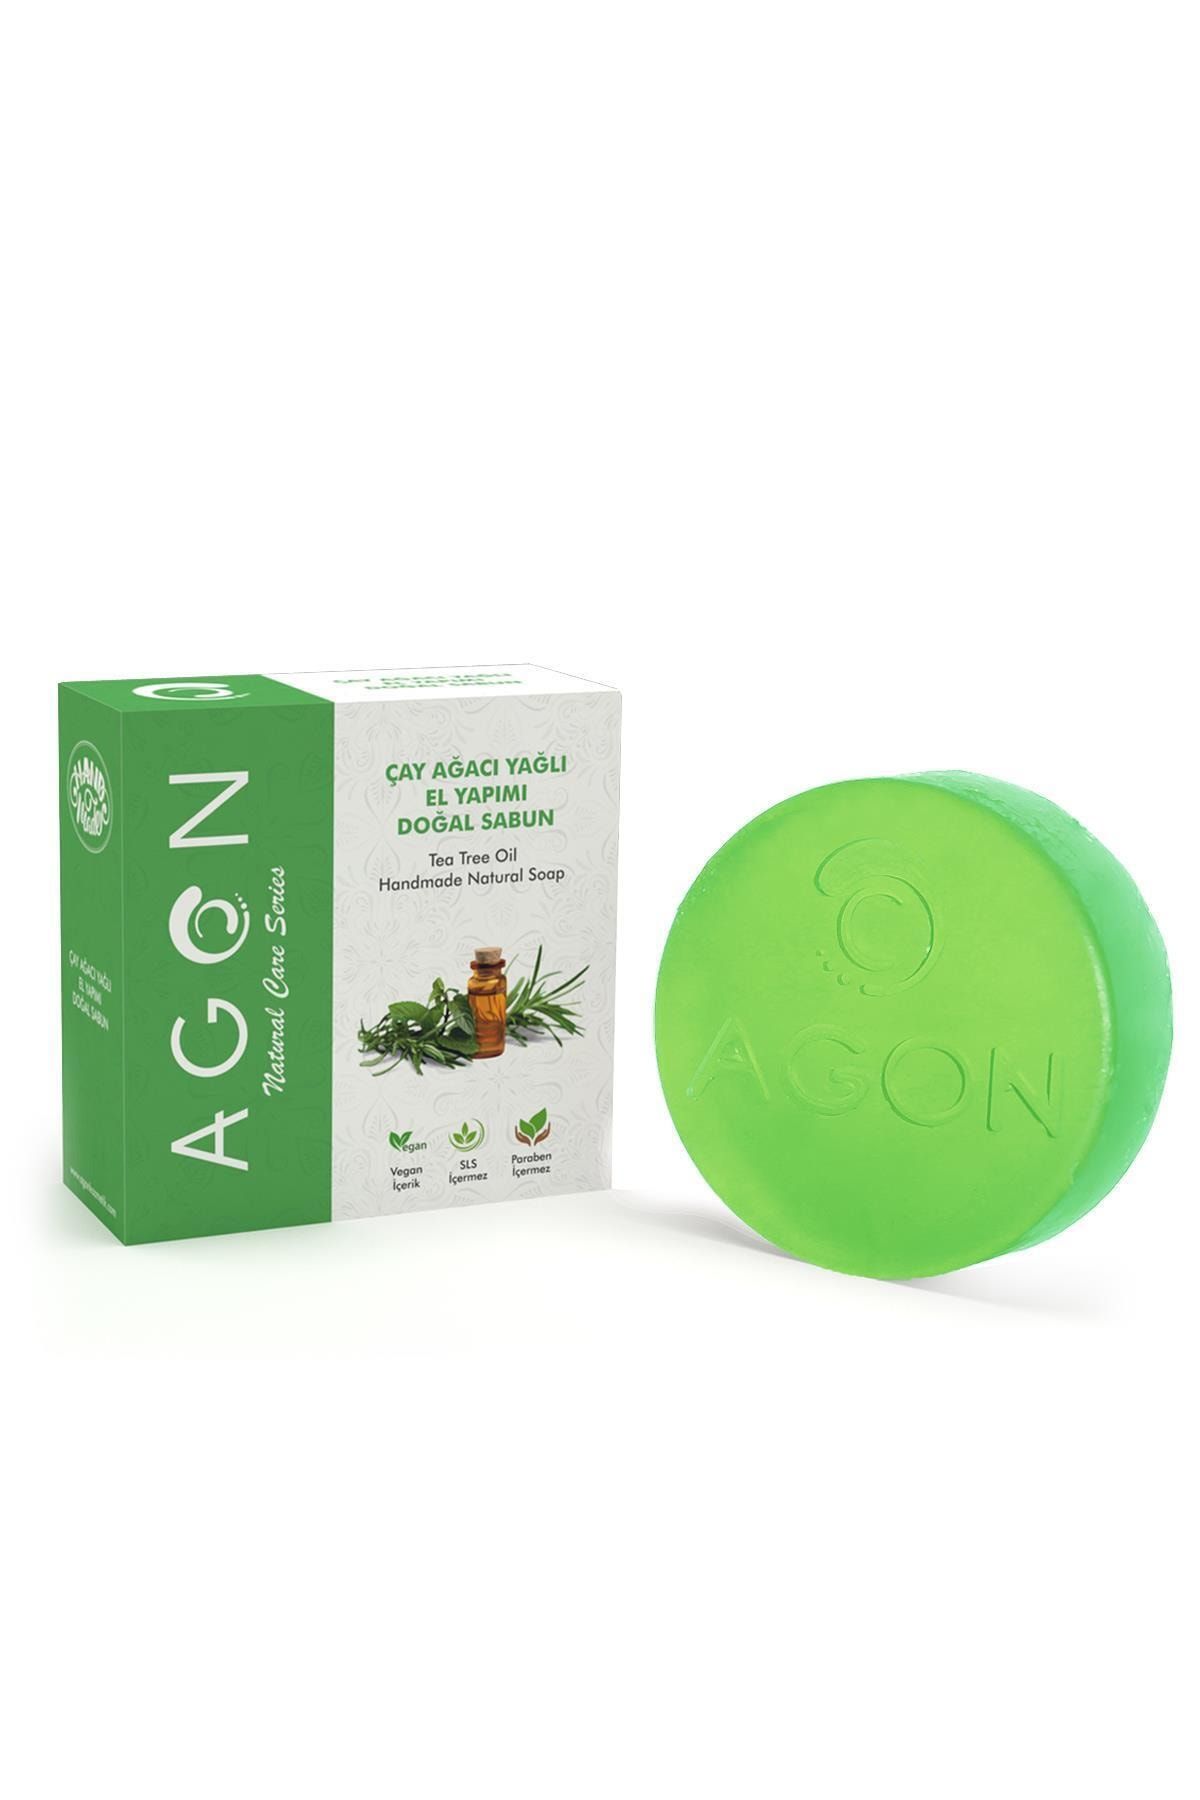 Agon Çay Ağacı Yağlı El Yapımı Doğal Sabun 100 Gr